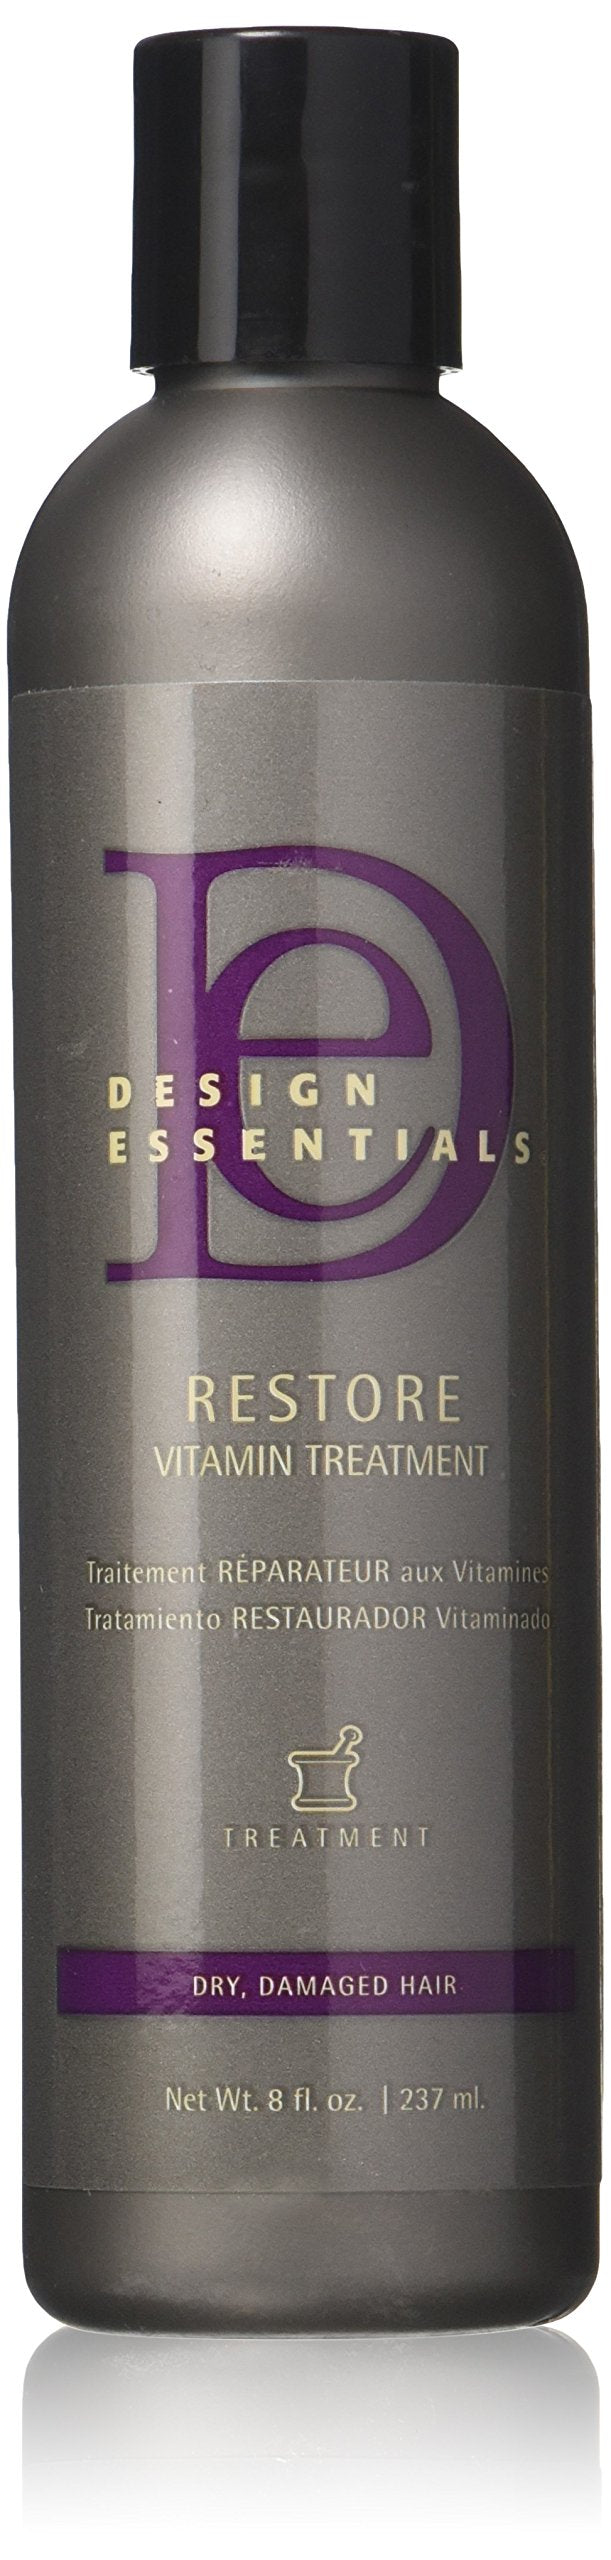 Design Essentials Restore Vitamin Treatment for Natural Dry Damaged Hair - 8 Oz